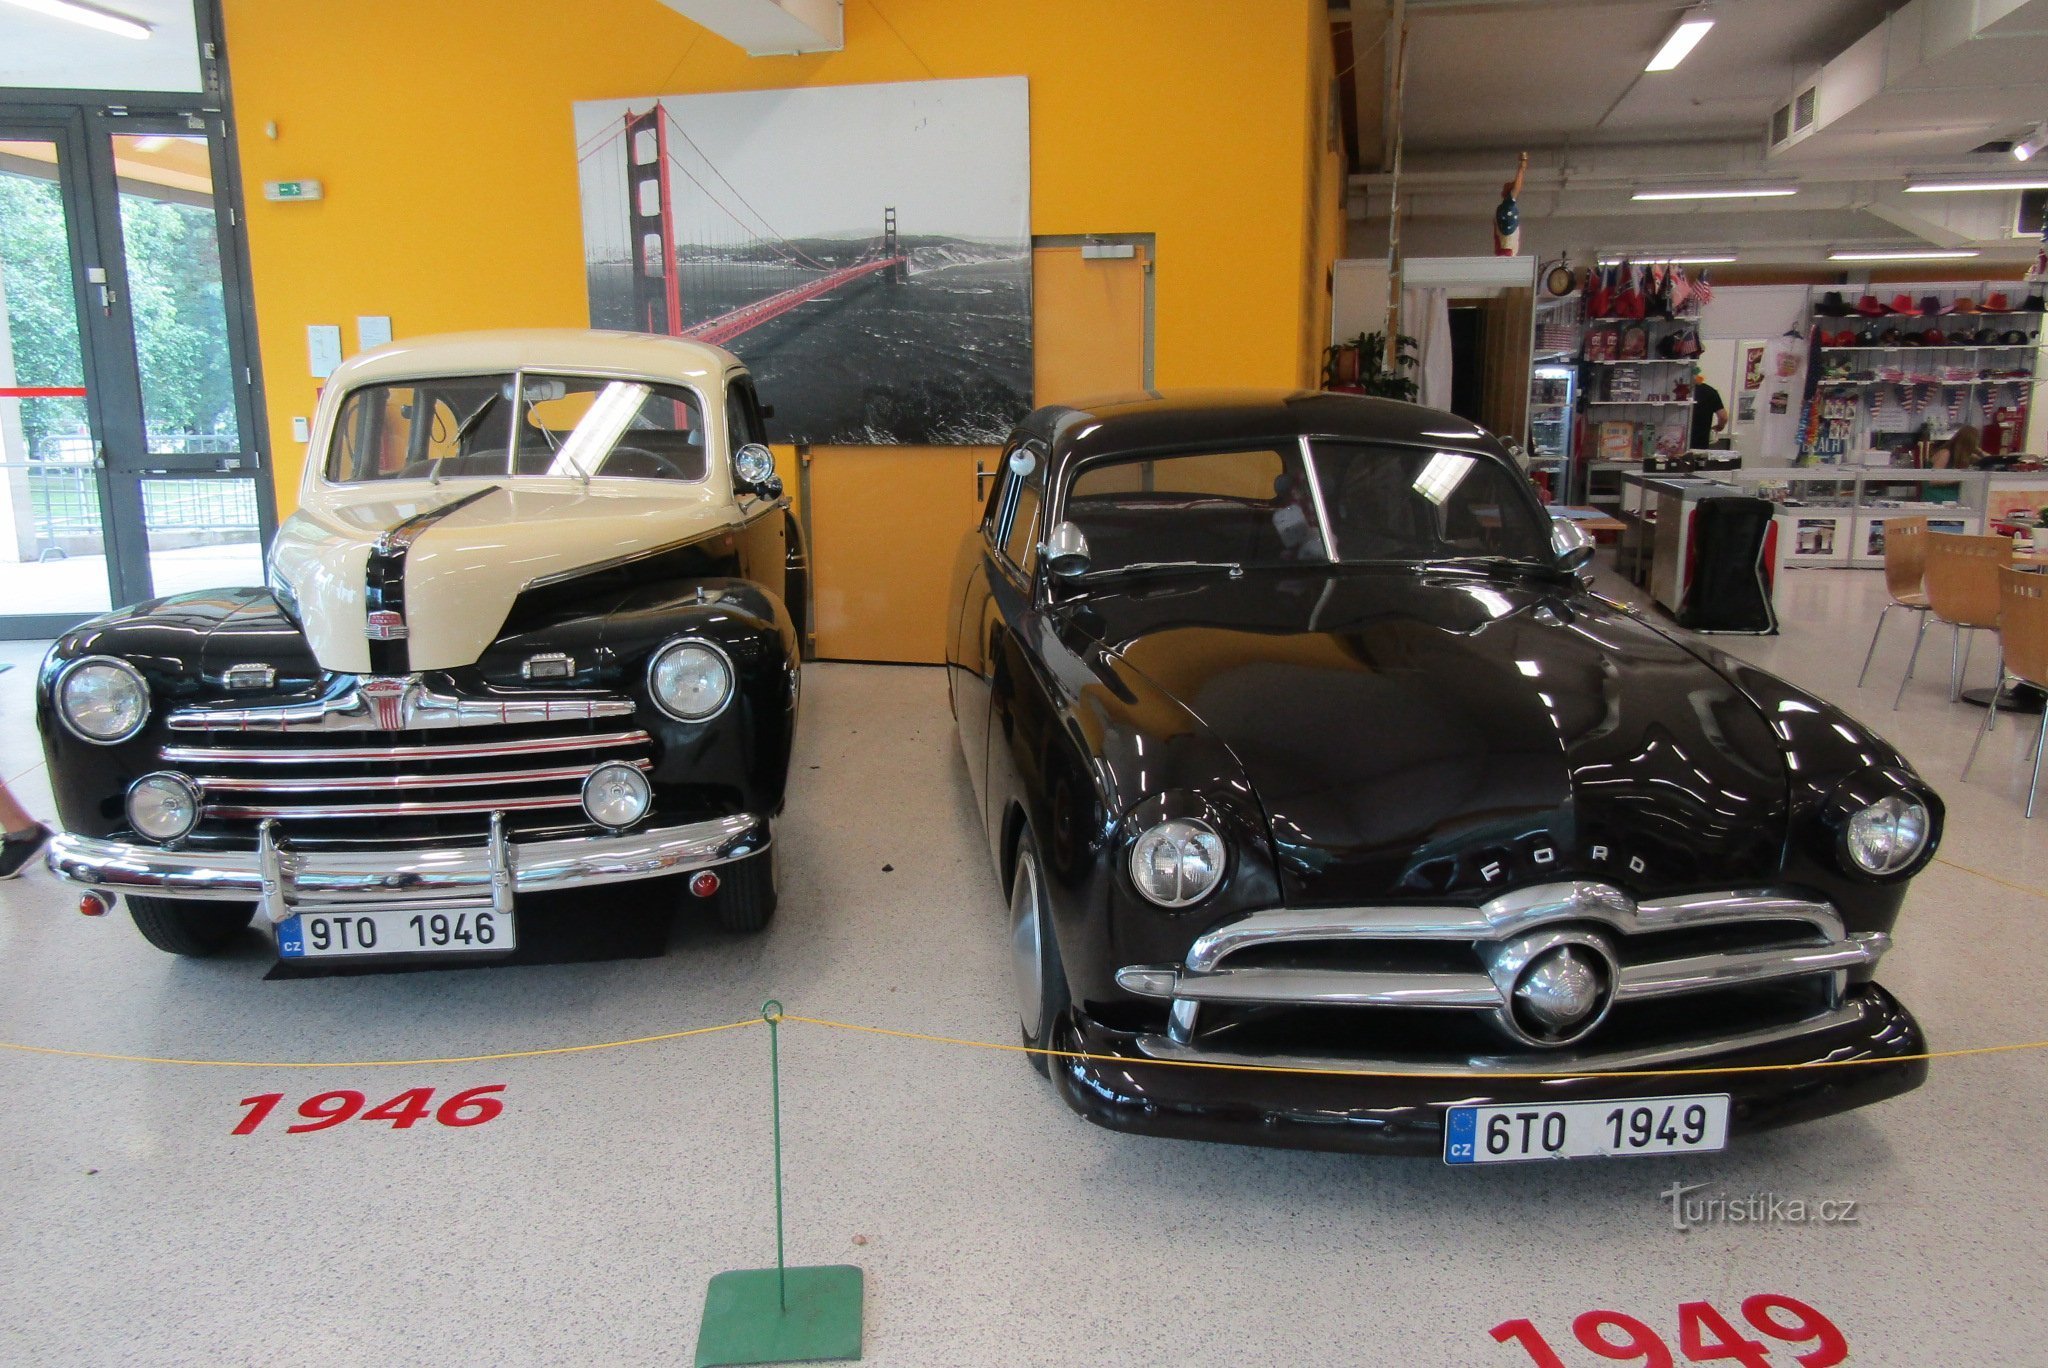 American Classic Cars, centrul expozițional Černá Louka, Ostrava